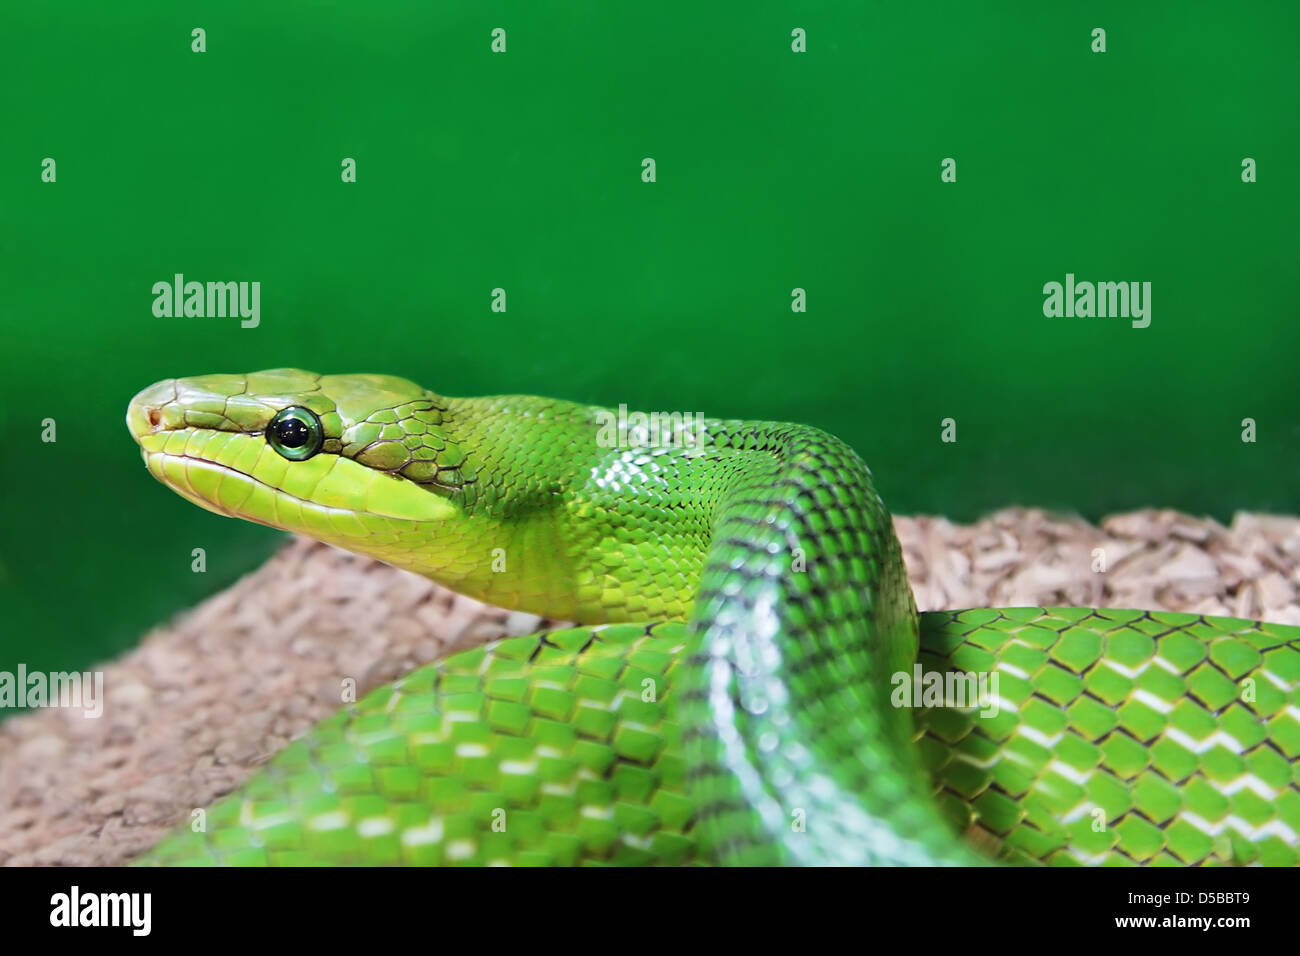 Beauty green snake close up Stock Photo